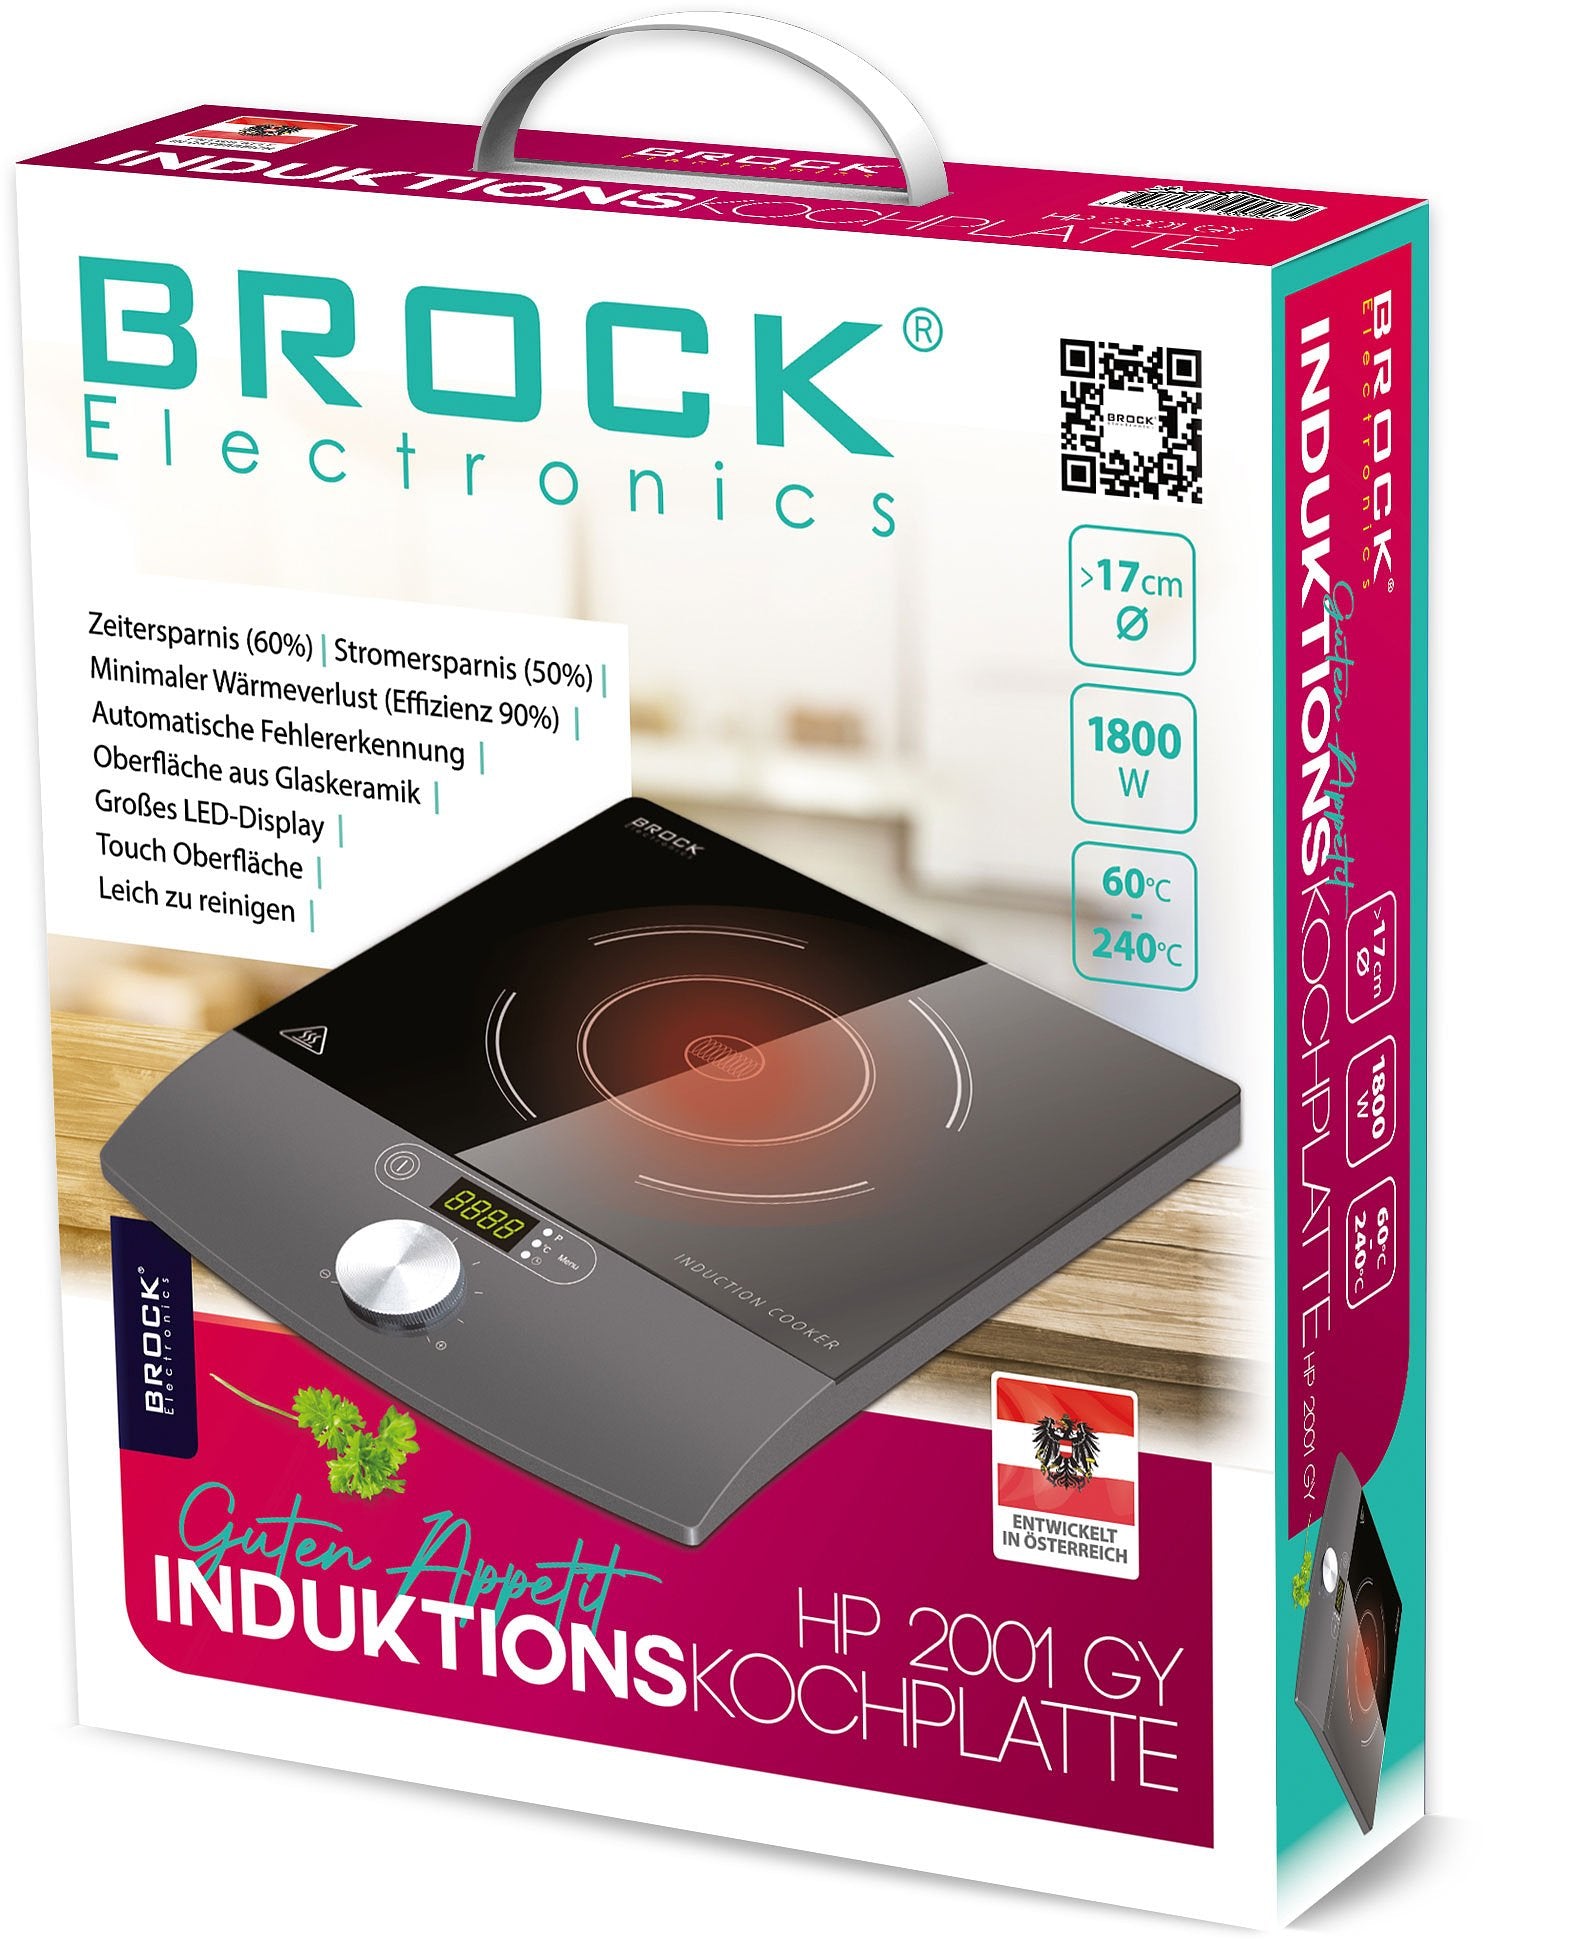 BROCK Electronics Inductiekookplaat HP 2001 GY (1800W, Glaskeramiek, Ø 17 cm)